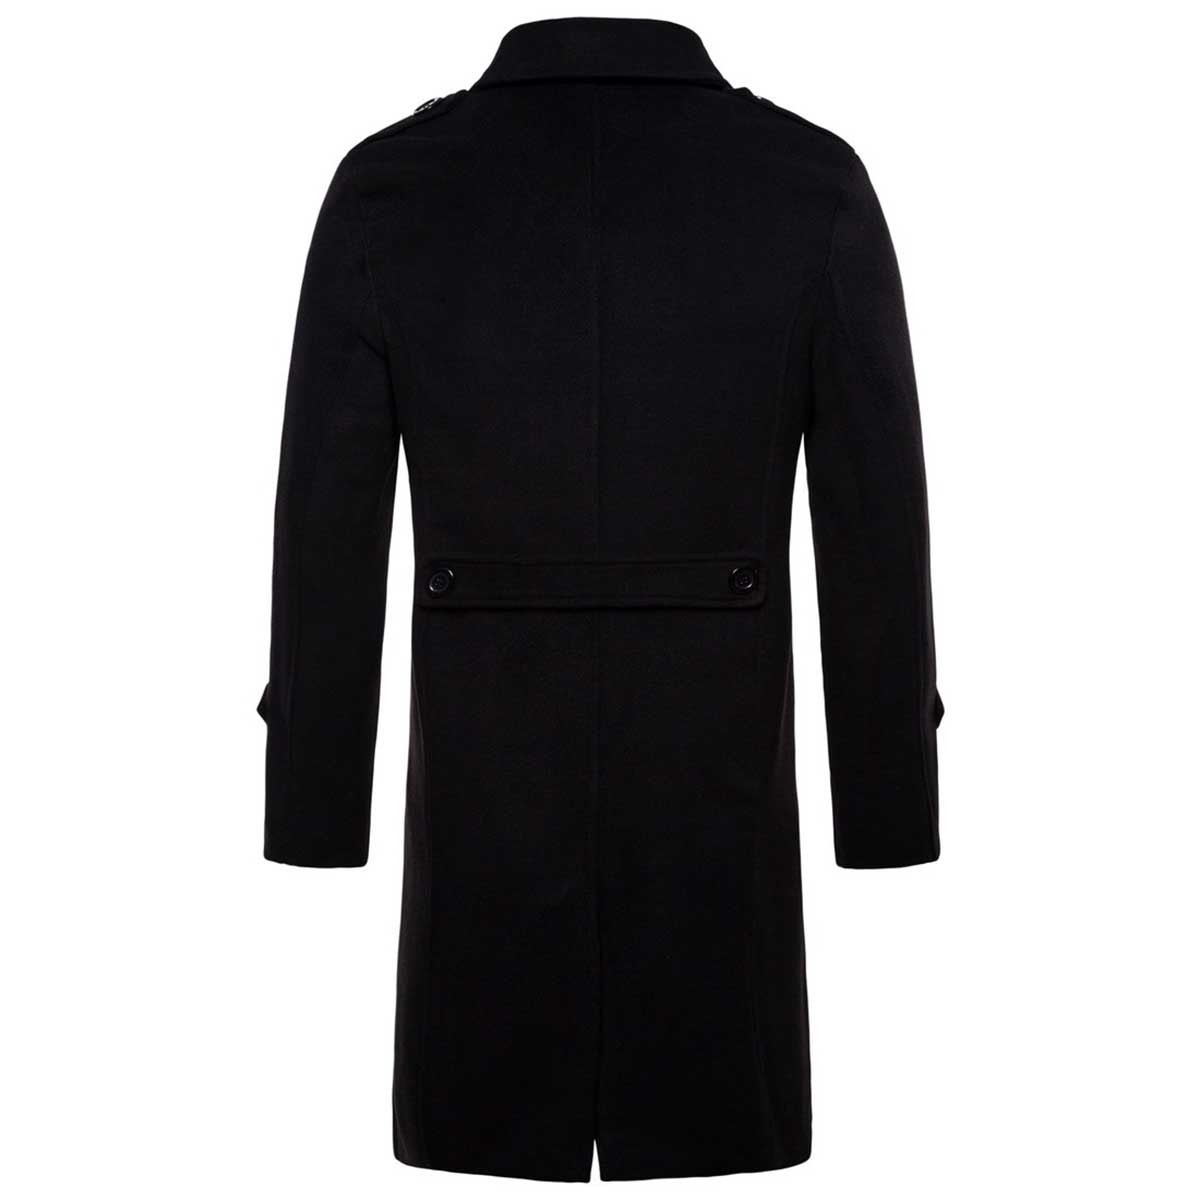 Men's Coat Long Slim Fit Winter Coat Solid Color with Flap Collar Black